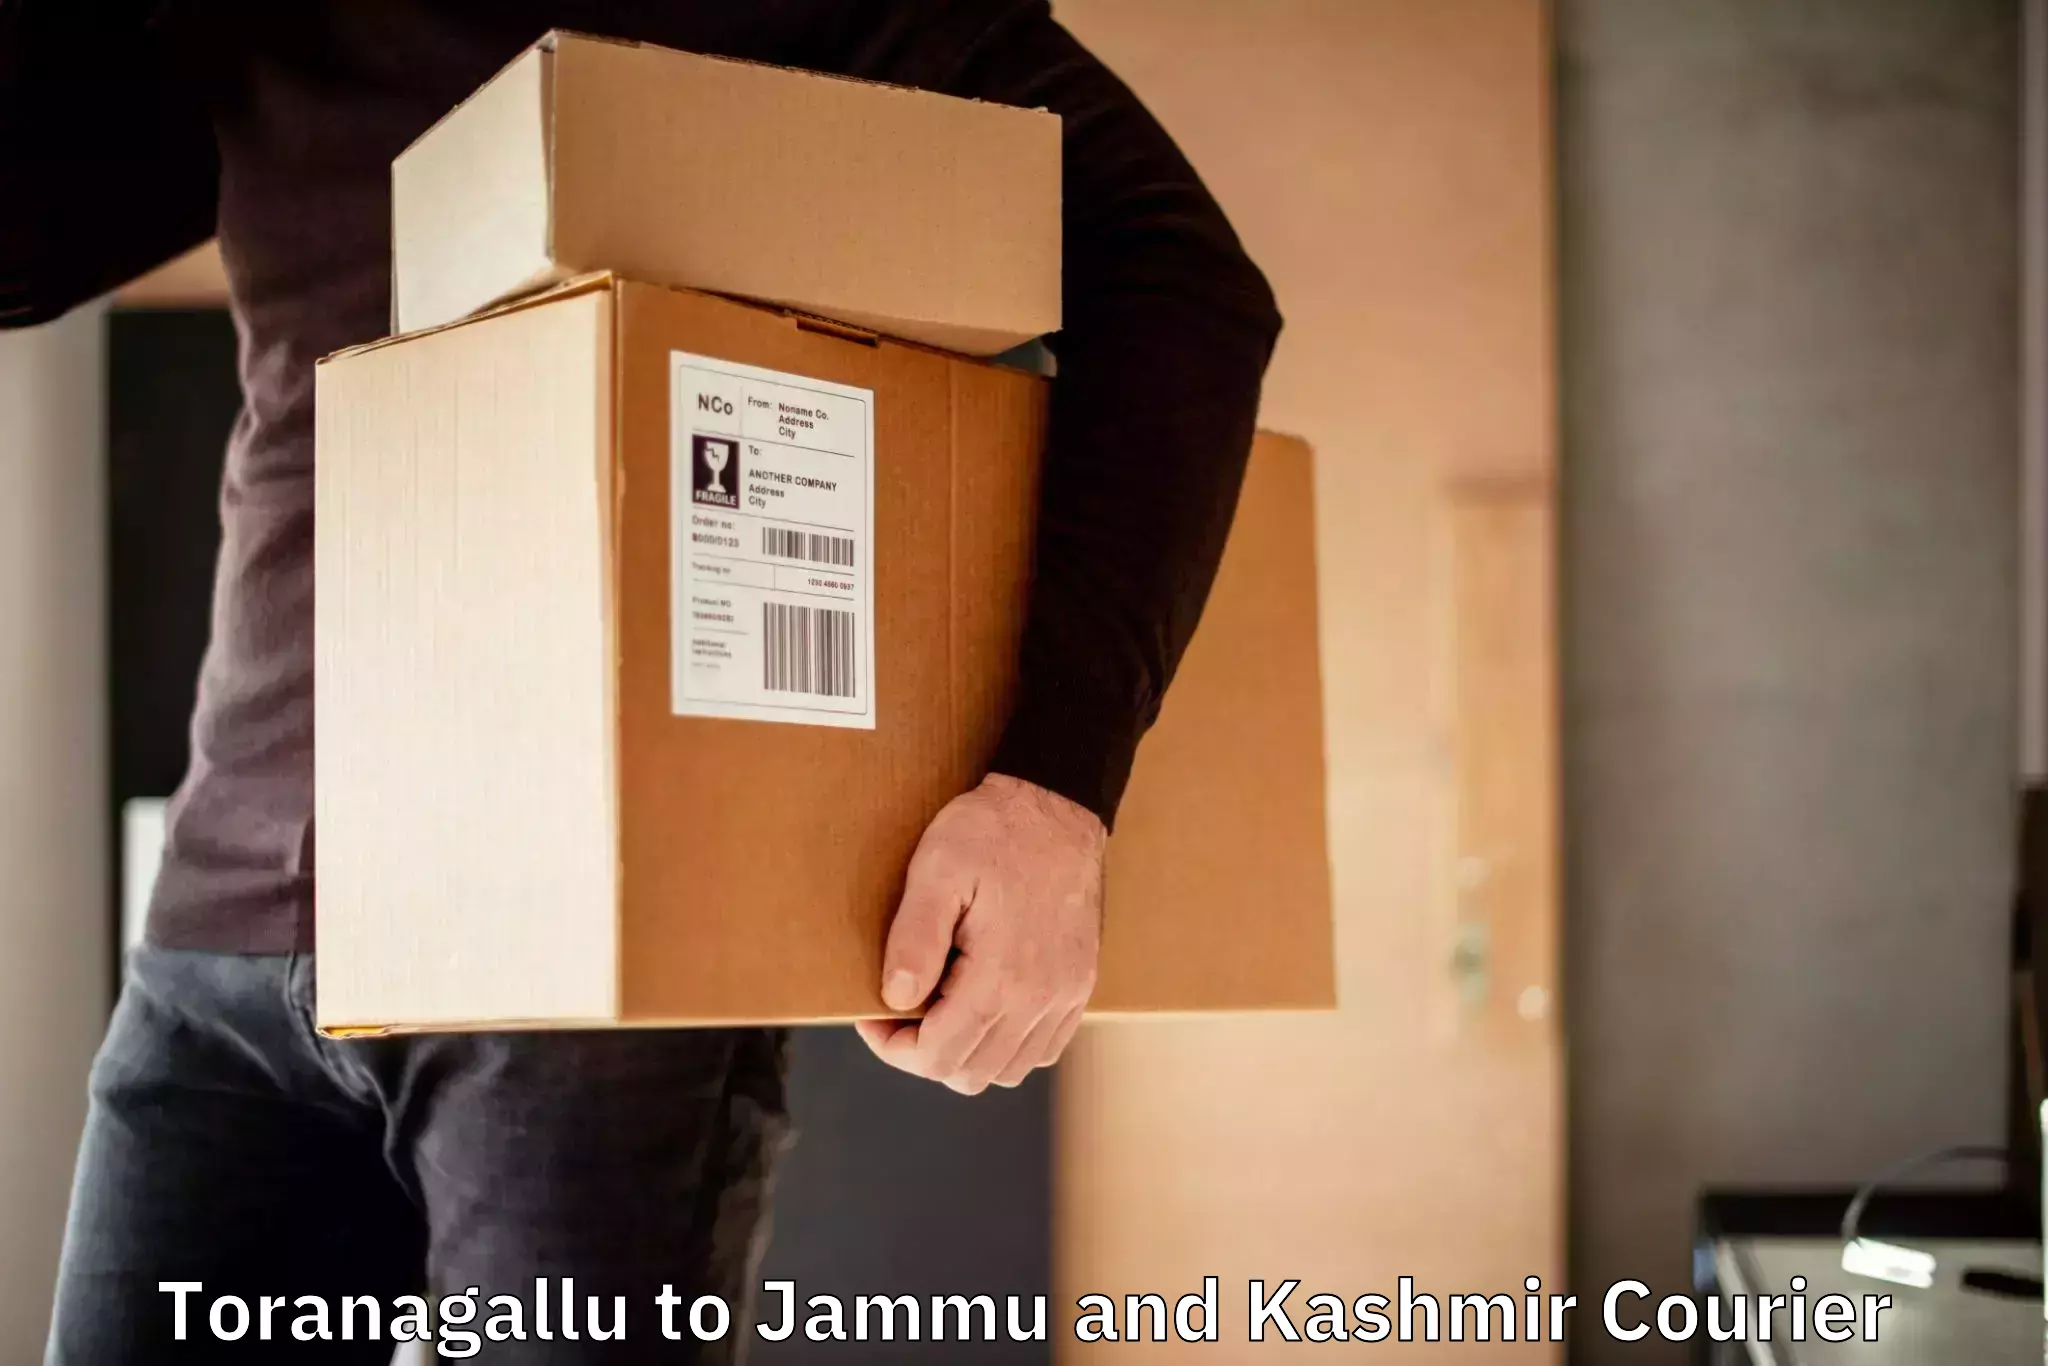 Express package delivery in Toranagallu to Kishtwar